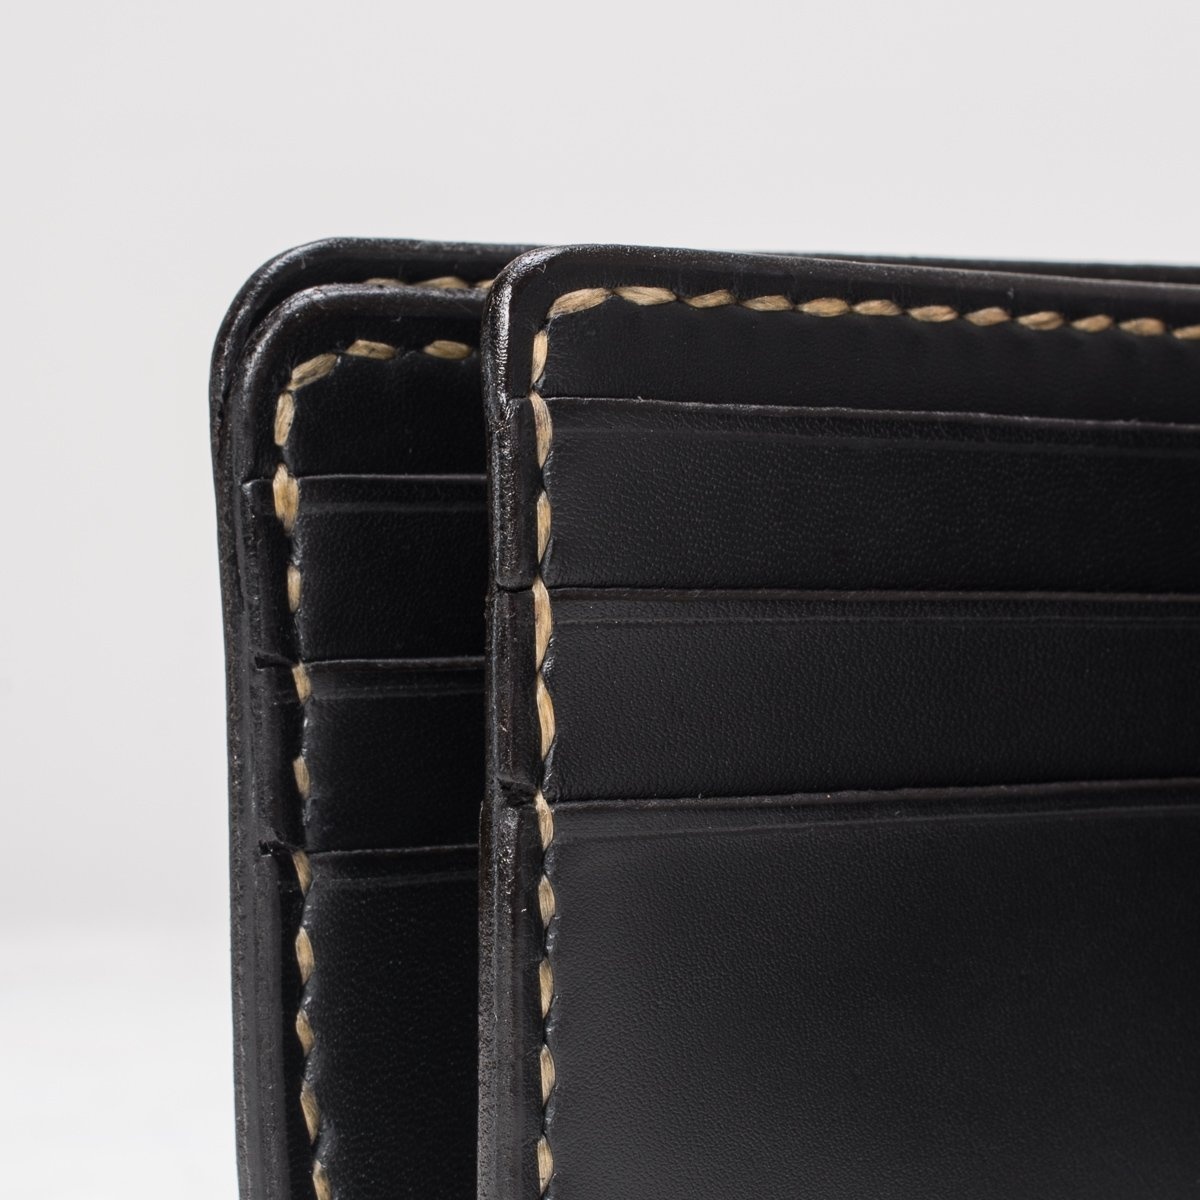 IHG-035 Calf Folding Wallet - Black or Tan - 11